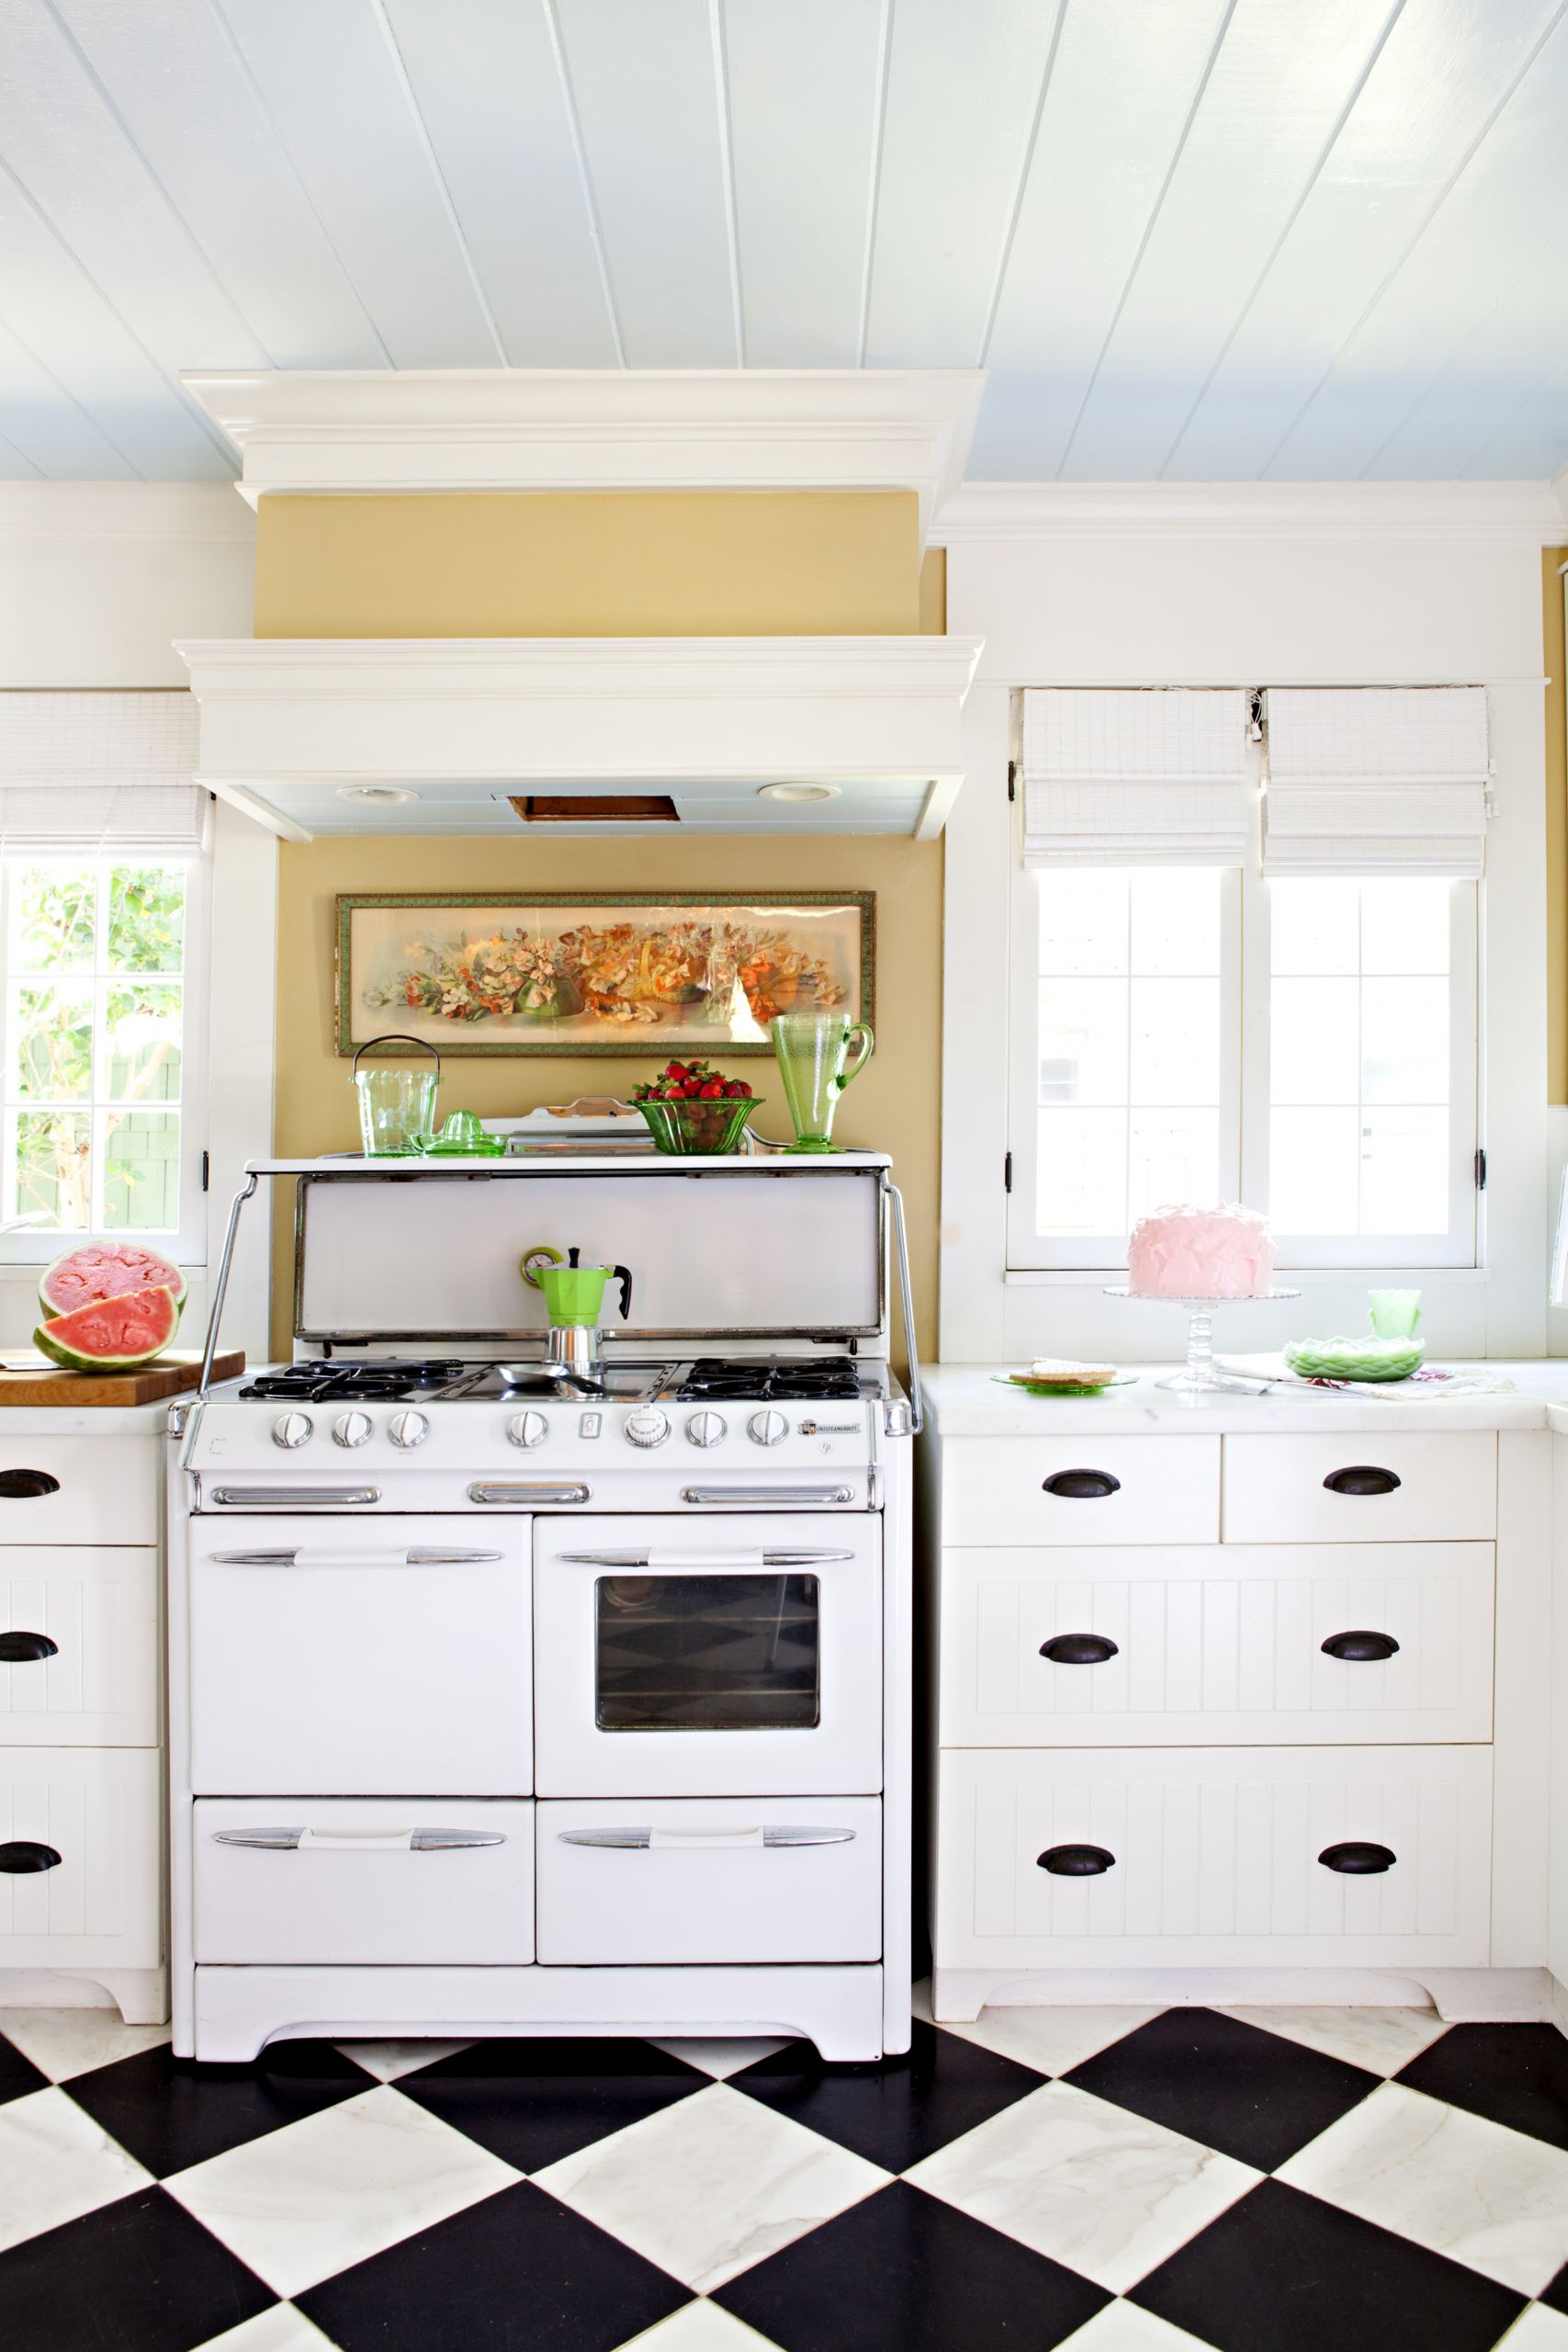 Retro Kitchen Small Appliances
 15 Retro Kitchen Appliances You’ll Love Cottage style